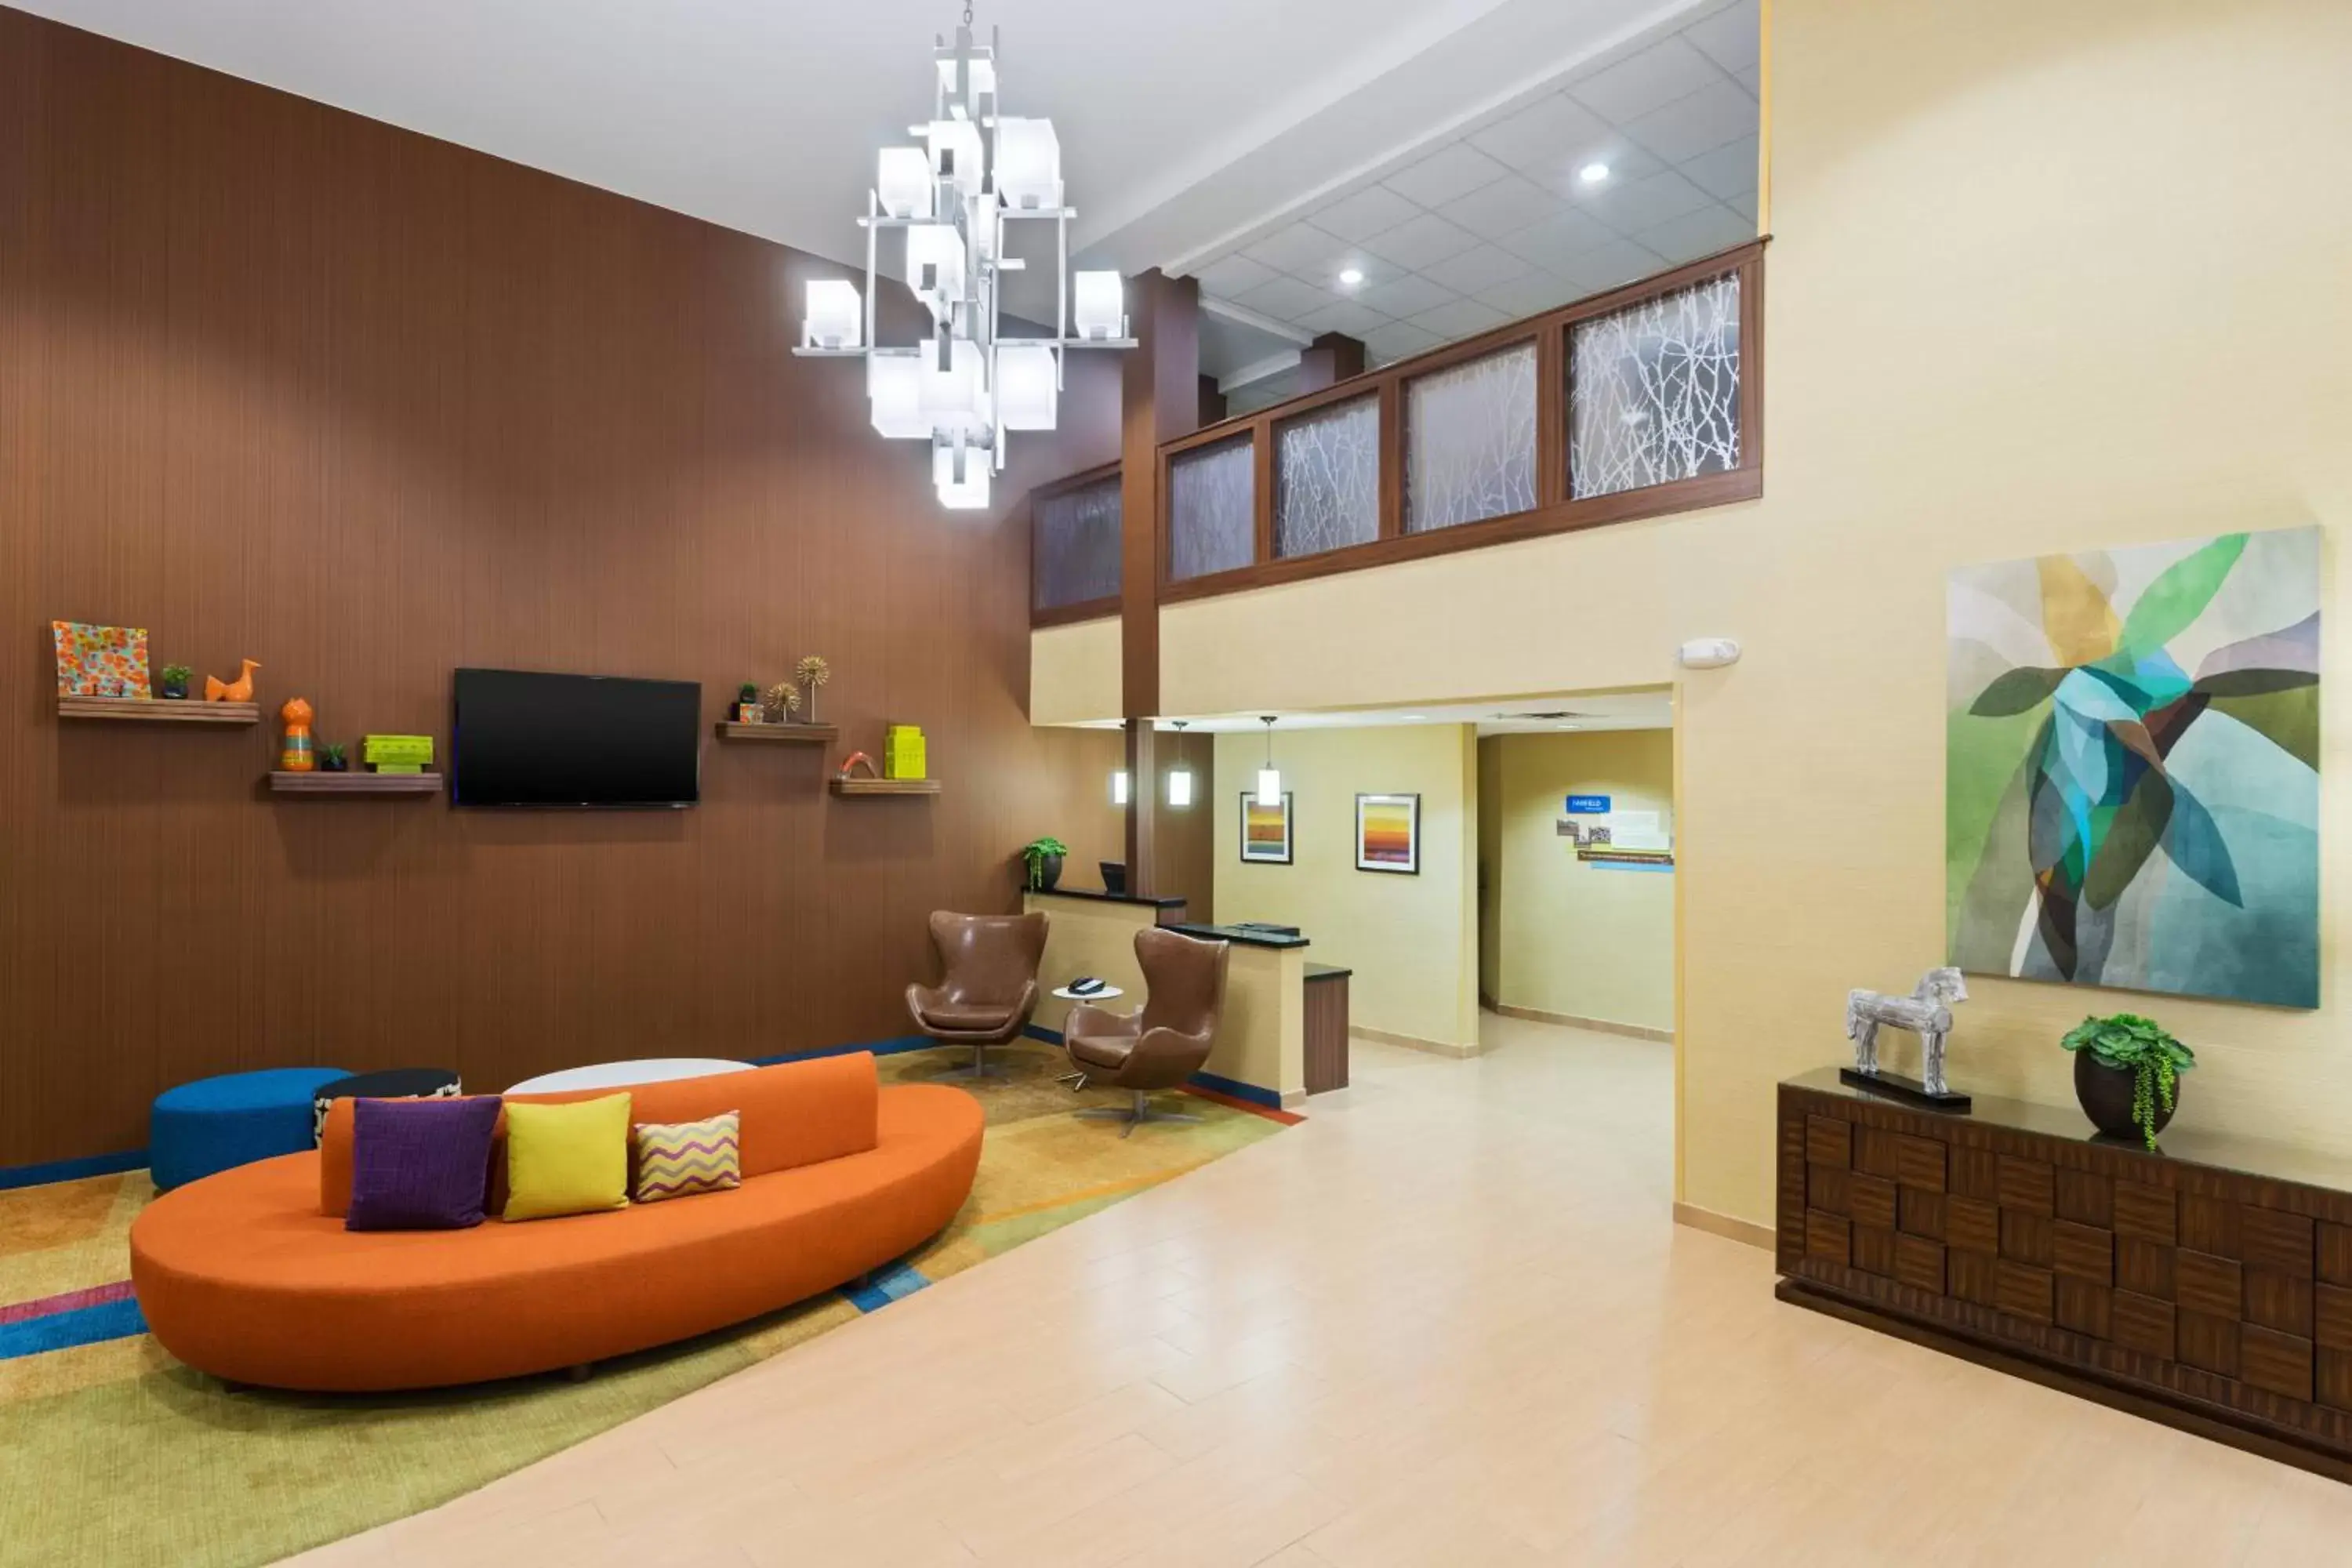 Lobby or reception in Fairfield Inn & Suites by Marriott Odessa